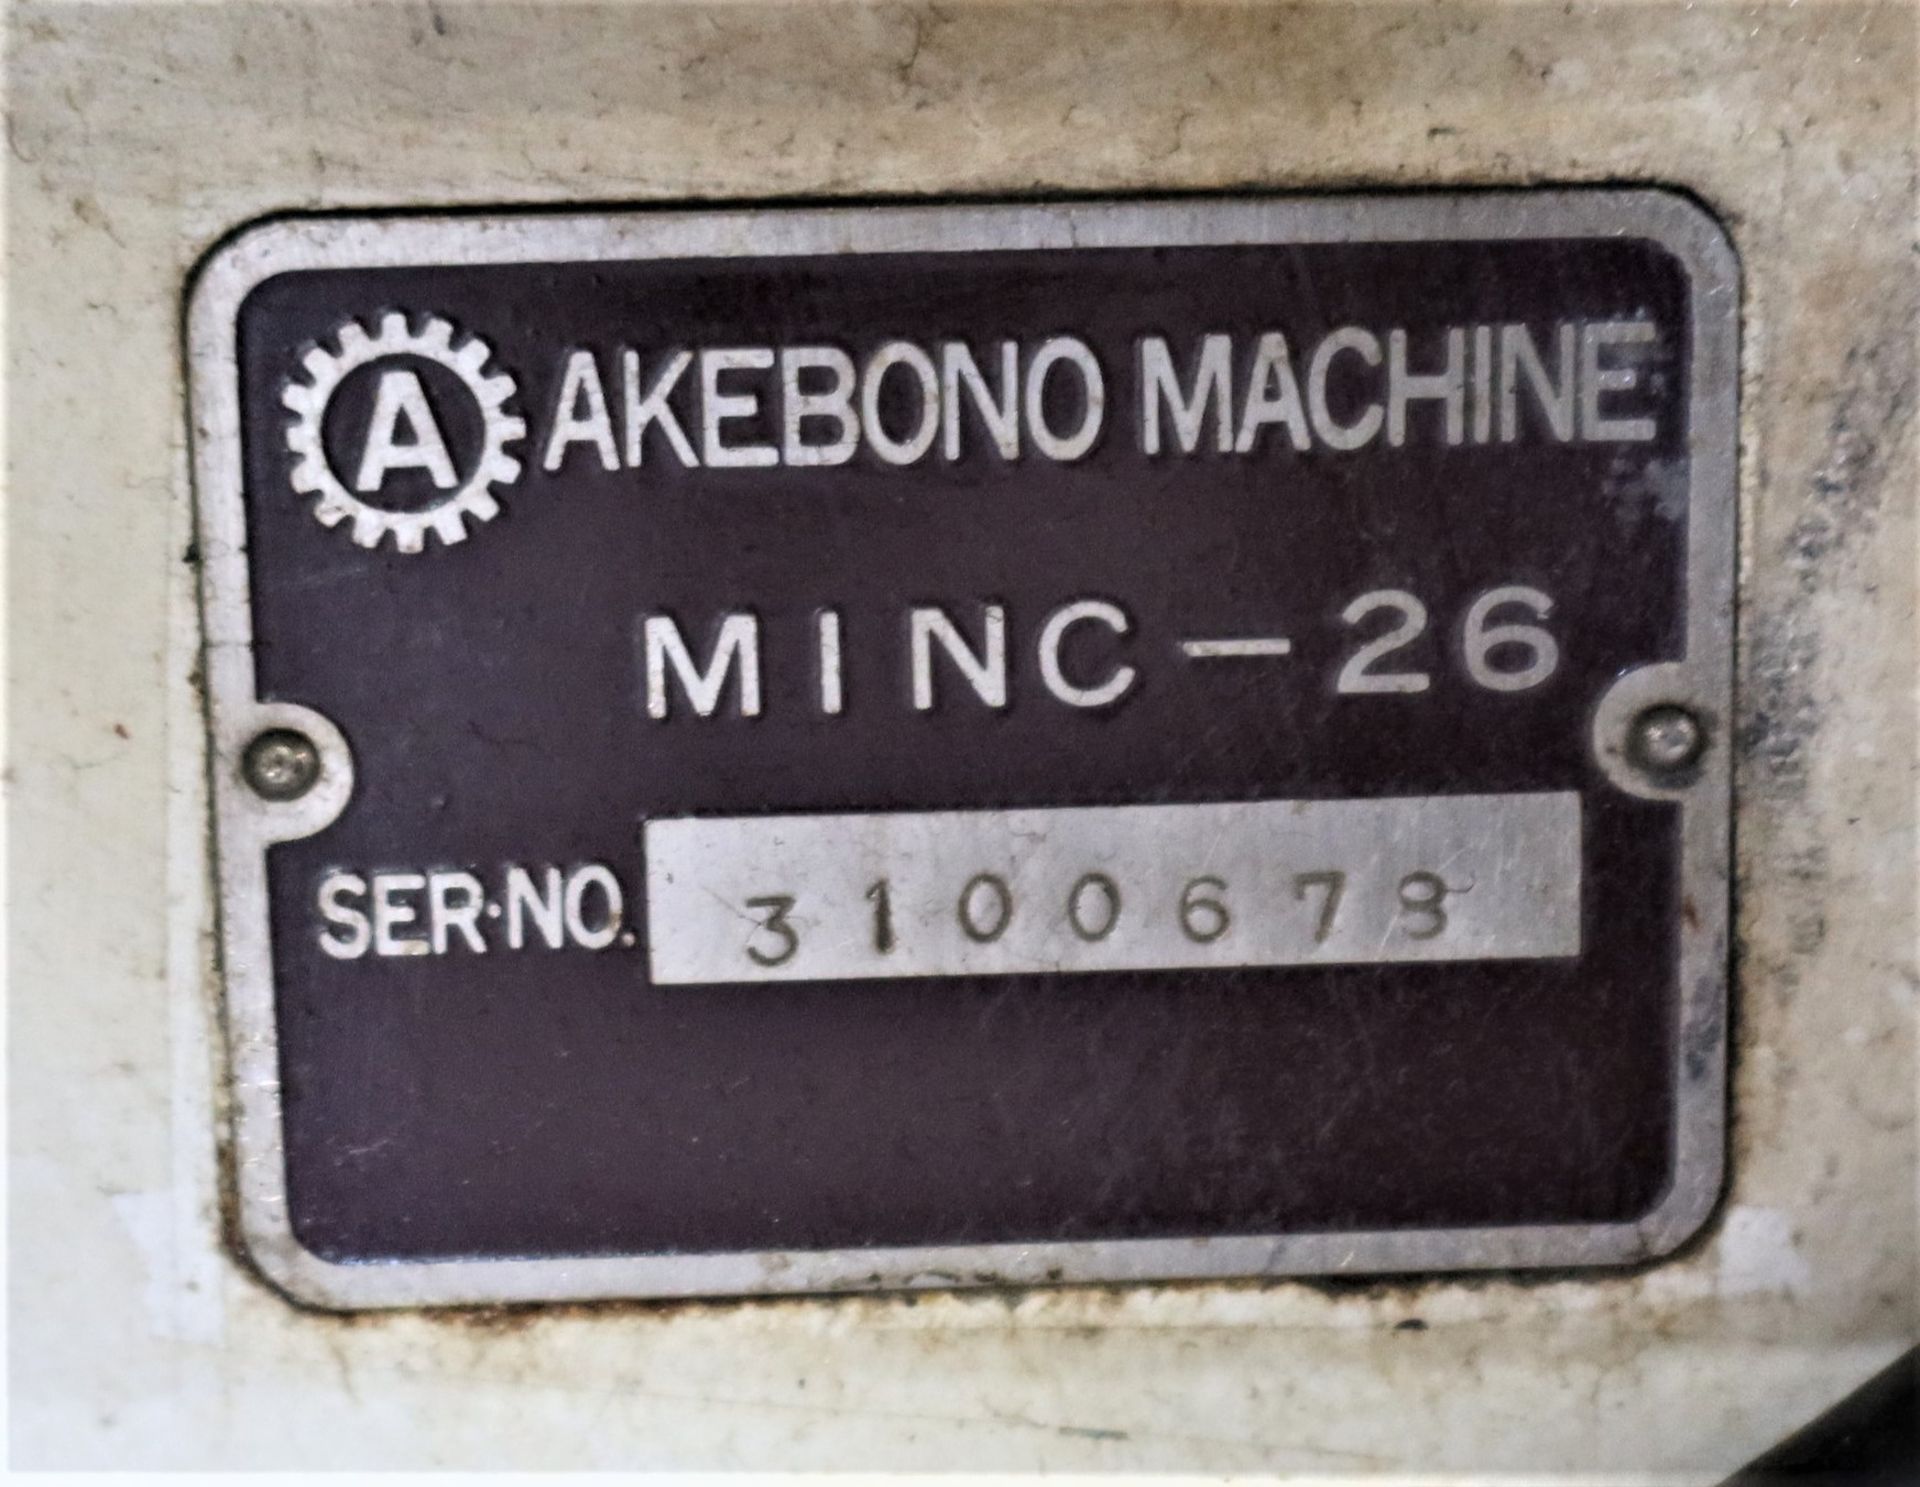 AKEBONO MINC-26 CNC GANG TYPE LATHE, S/N 3100678 - Image 5 of 5